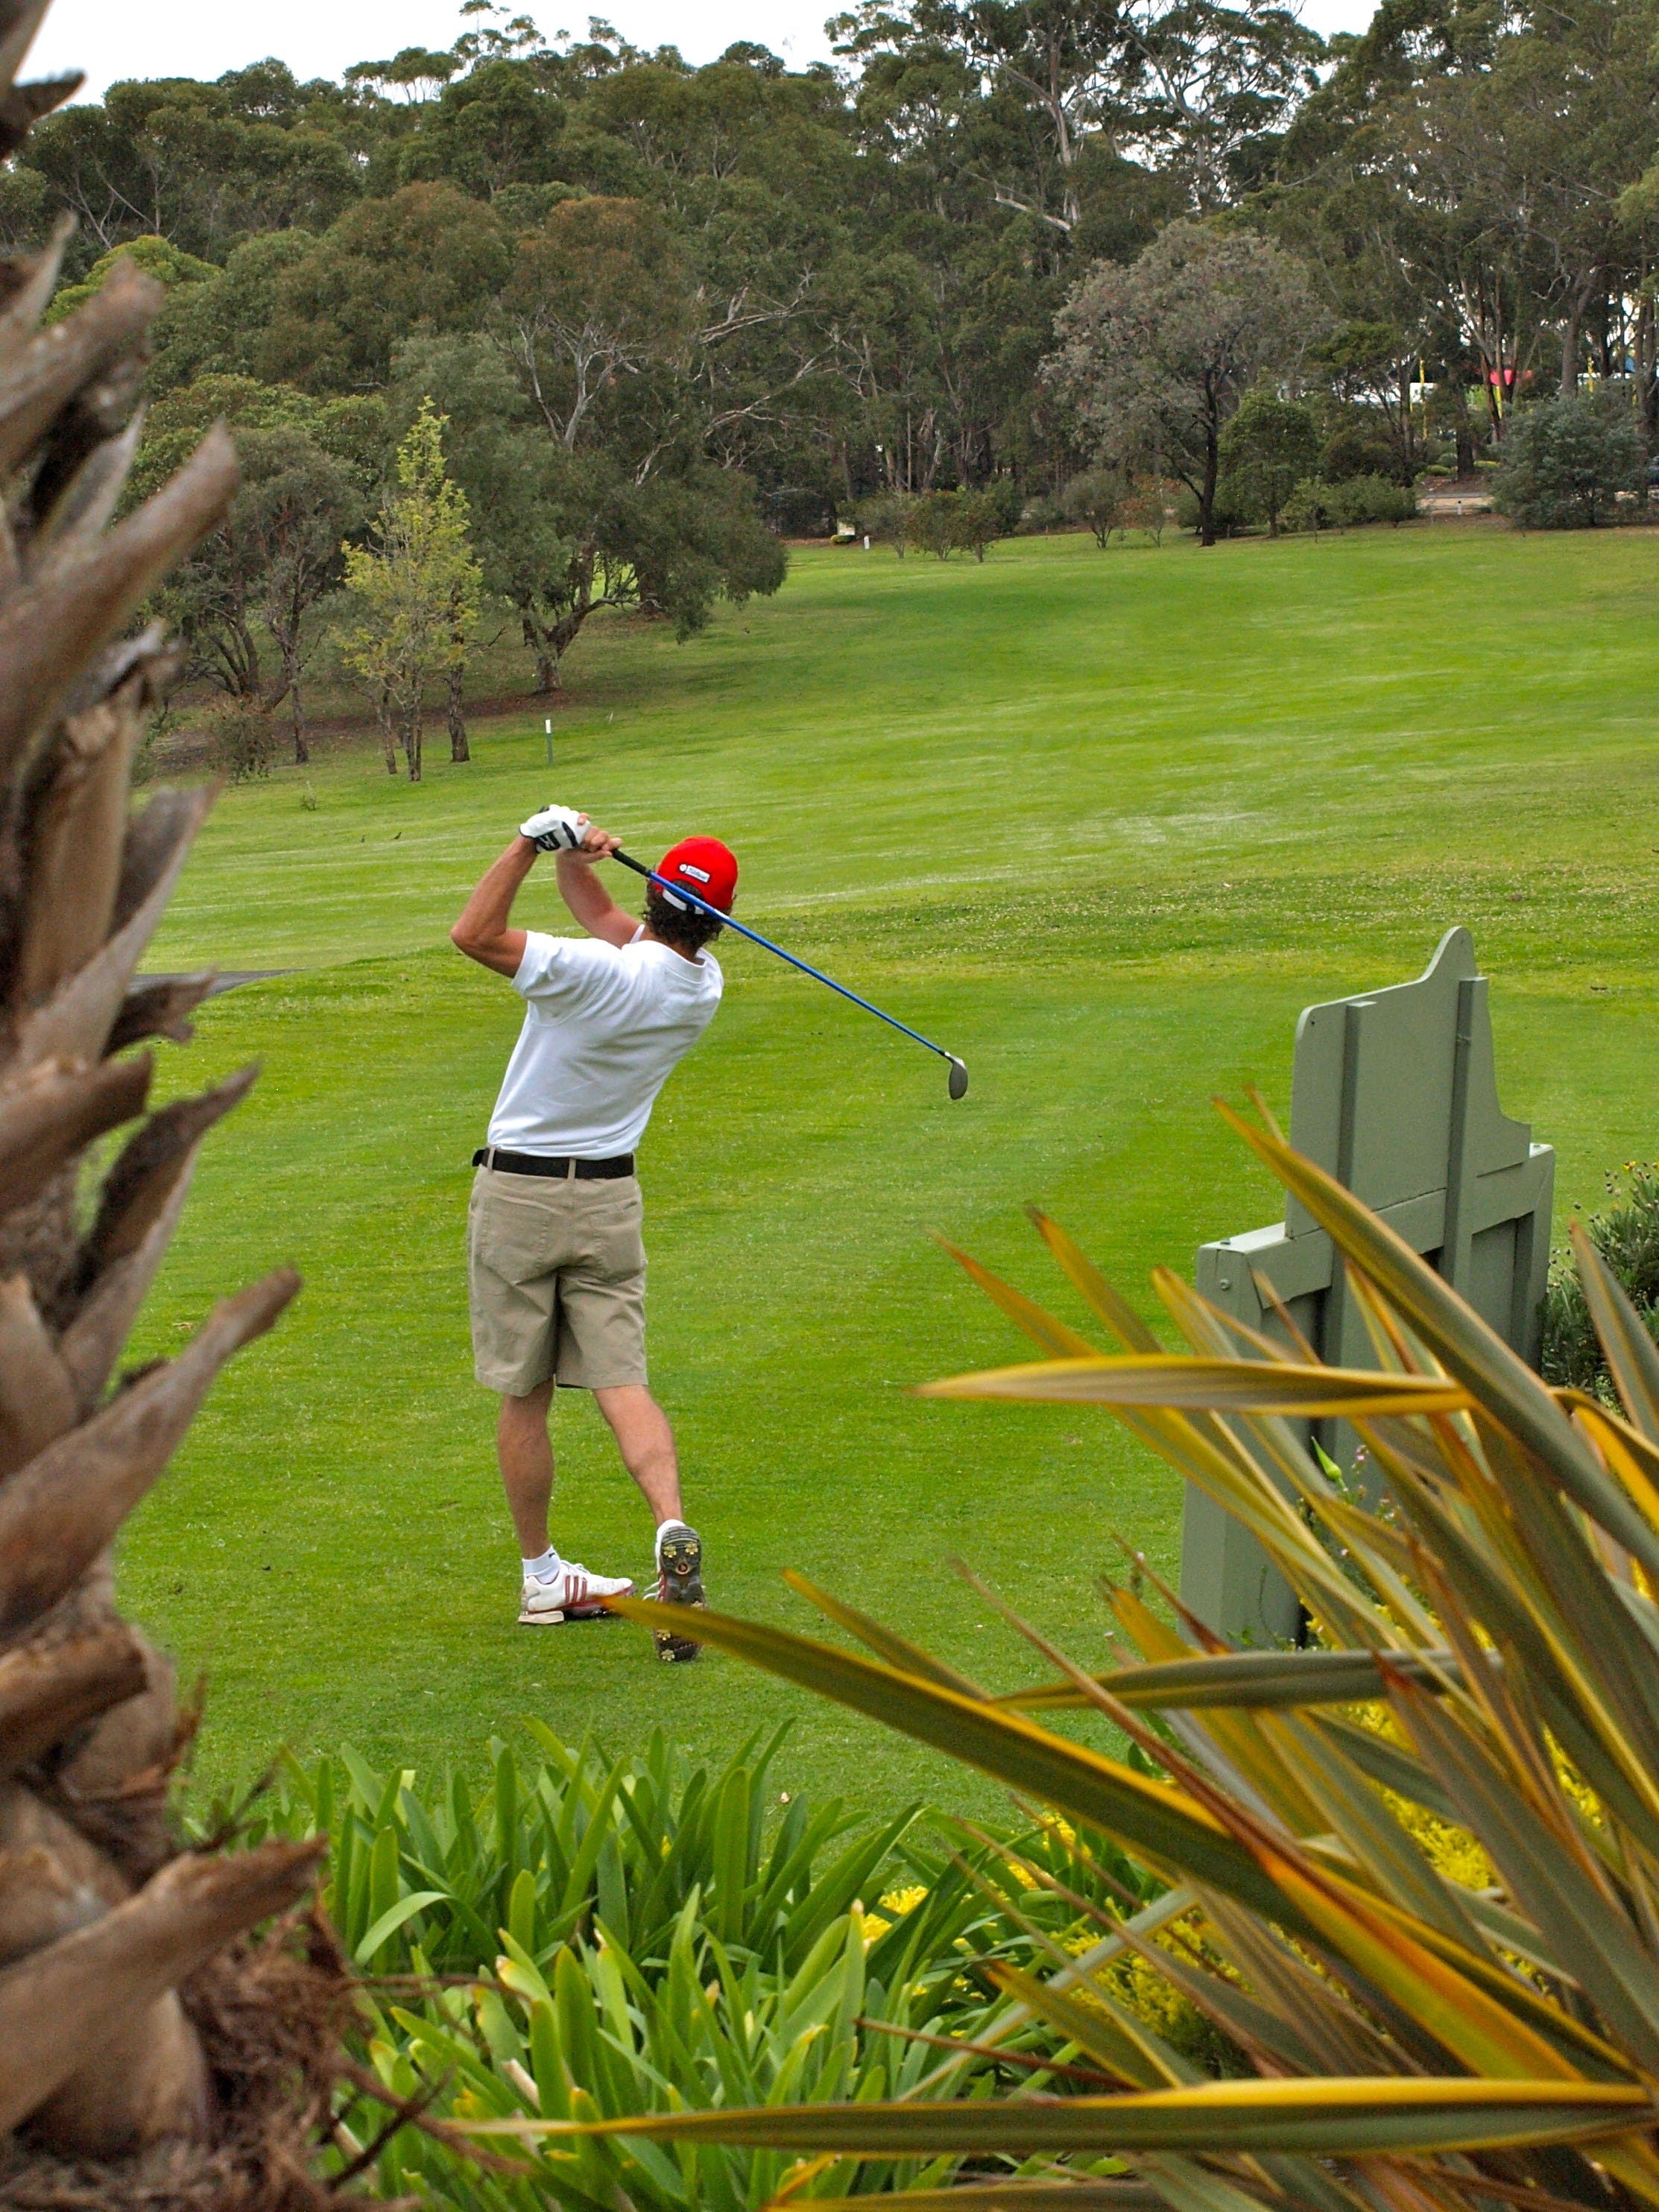 Pambula Merimbula Golf Club - Attractions Brisbane